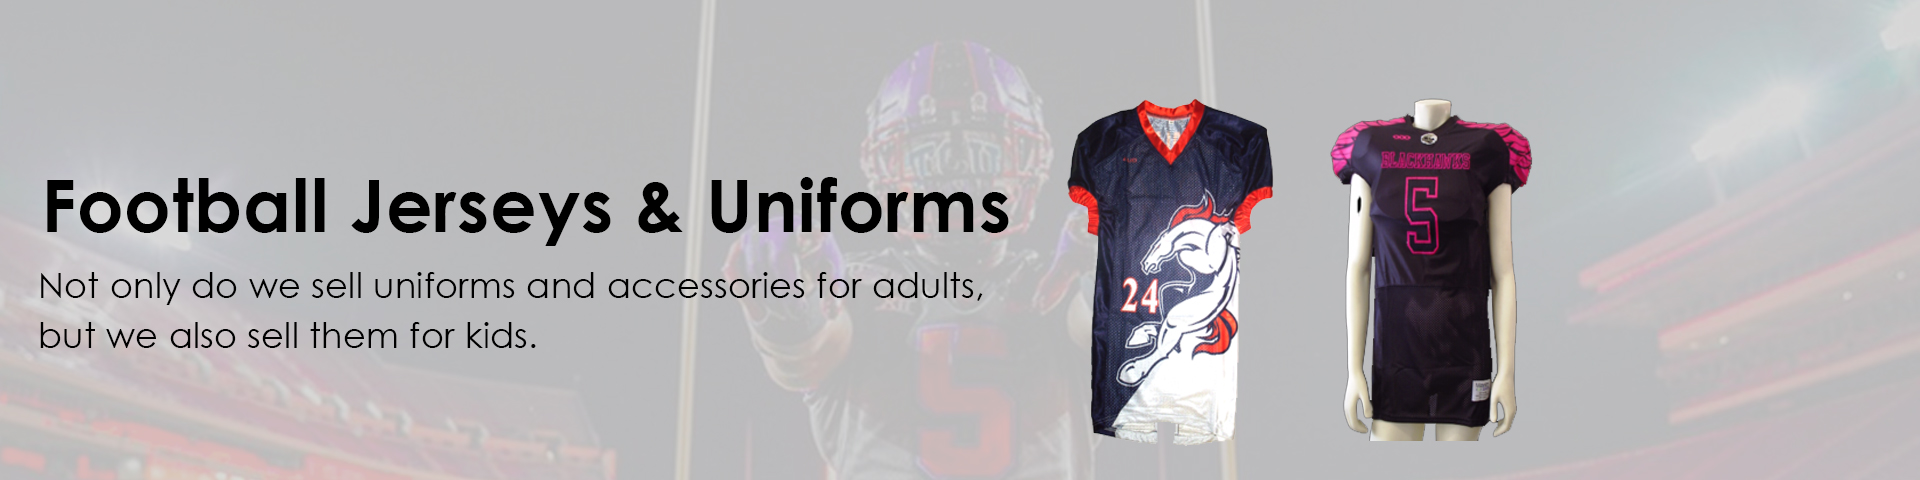 Custom Black Friday Cheap Custom Football Jerseys Deals - Sale 2020 Cyber  Monday Custom Jerseys Outlet Football Jerseys, Football Uniforms For Your  Team